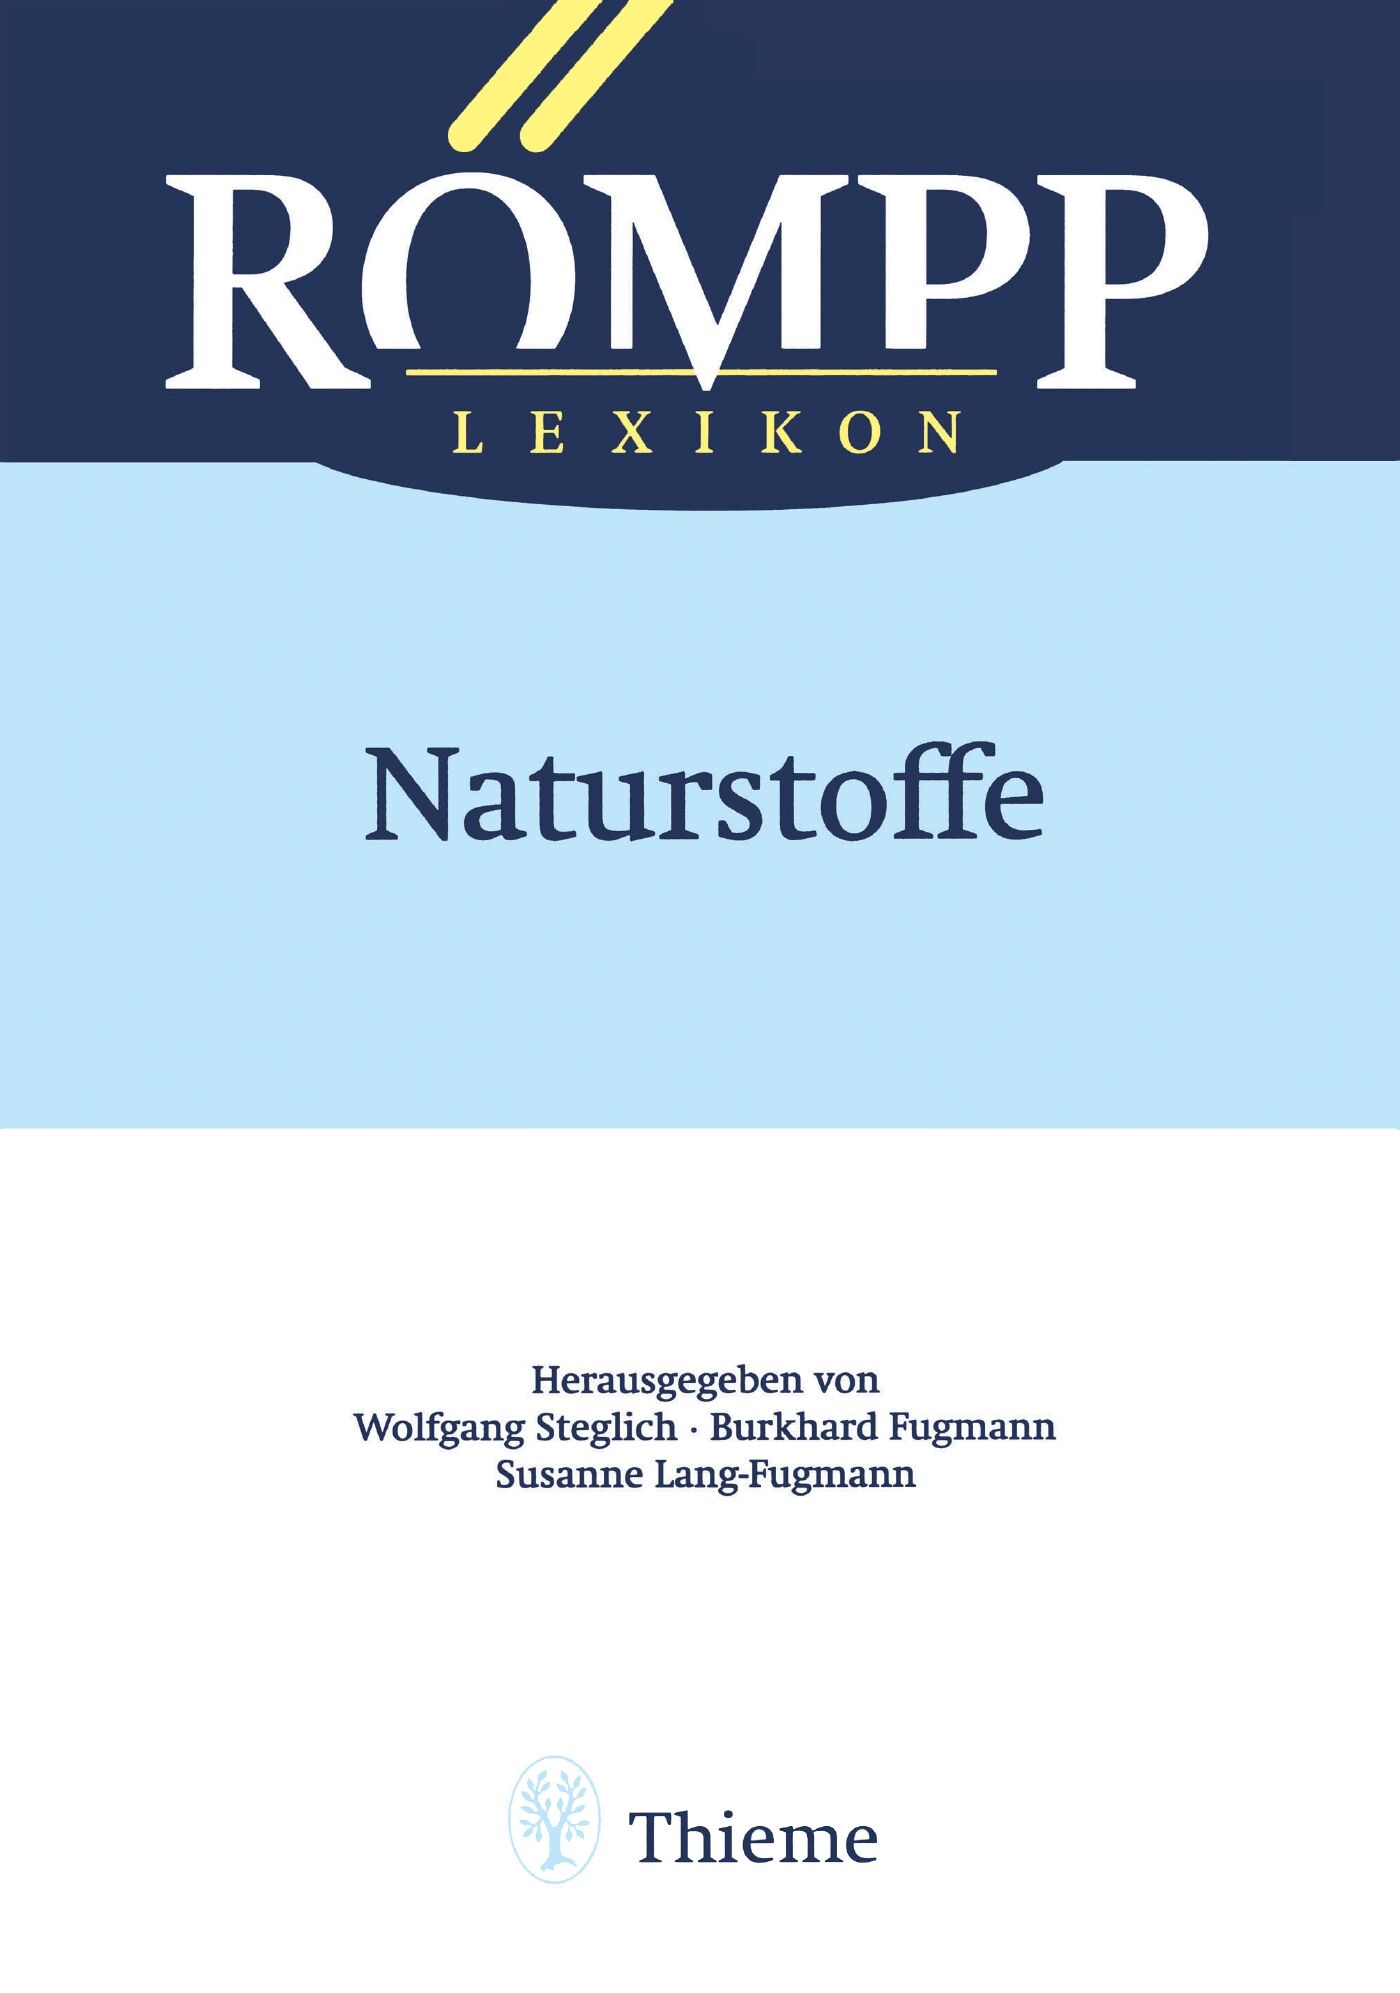 RÖMPP Lexikon Naturstoffe, 1. Auflage, 1997, 9783131792914